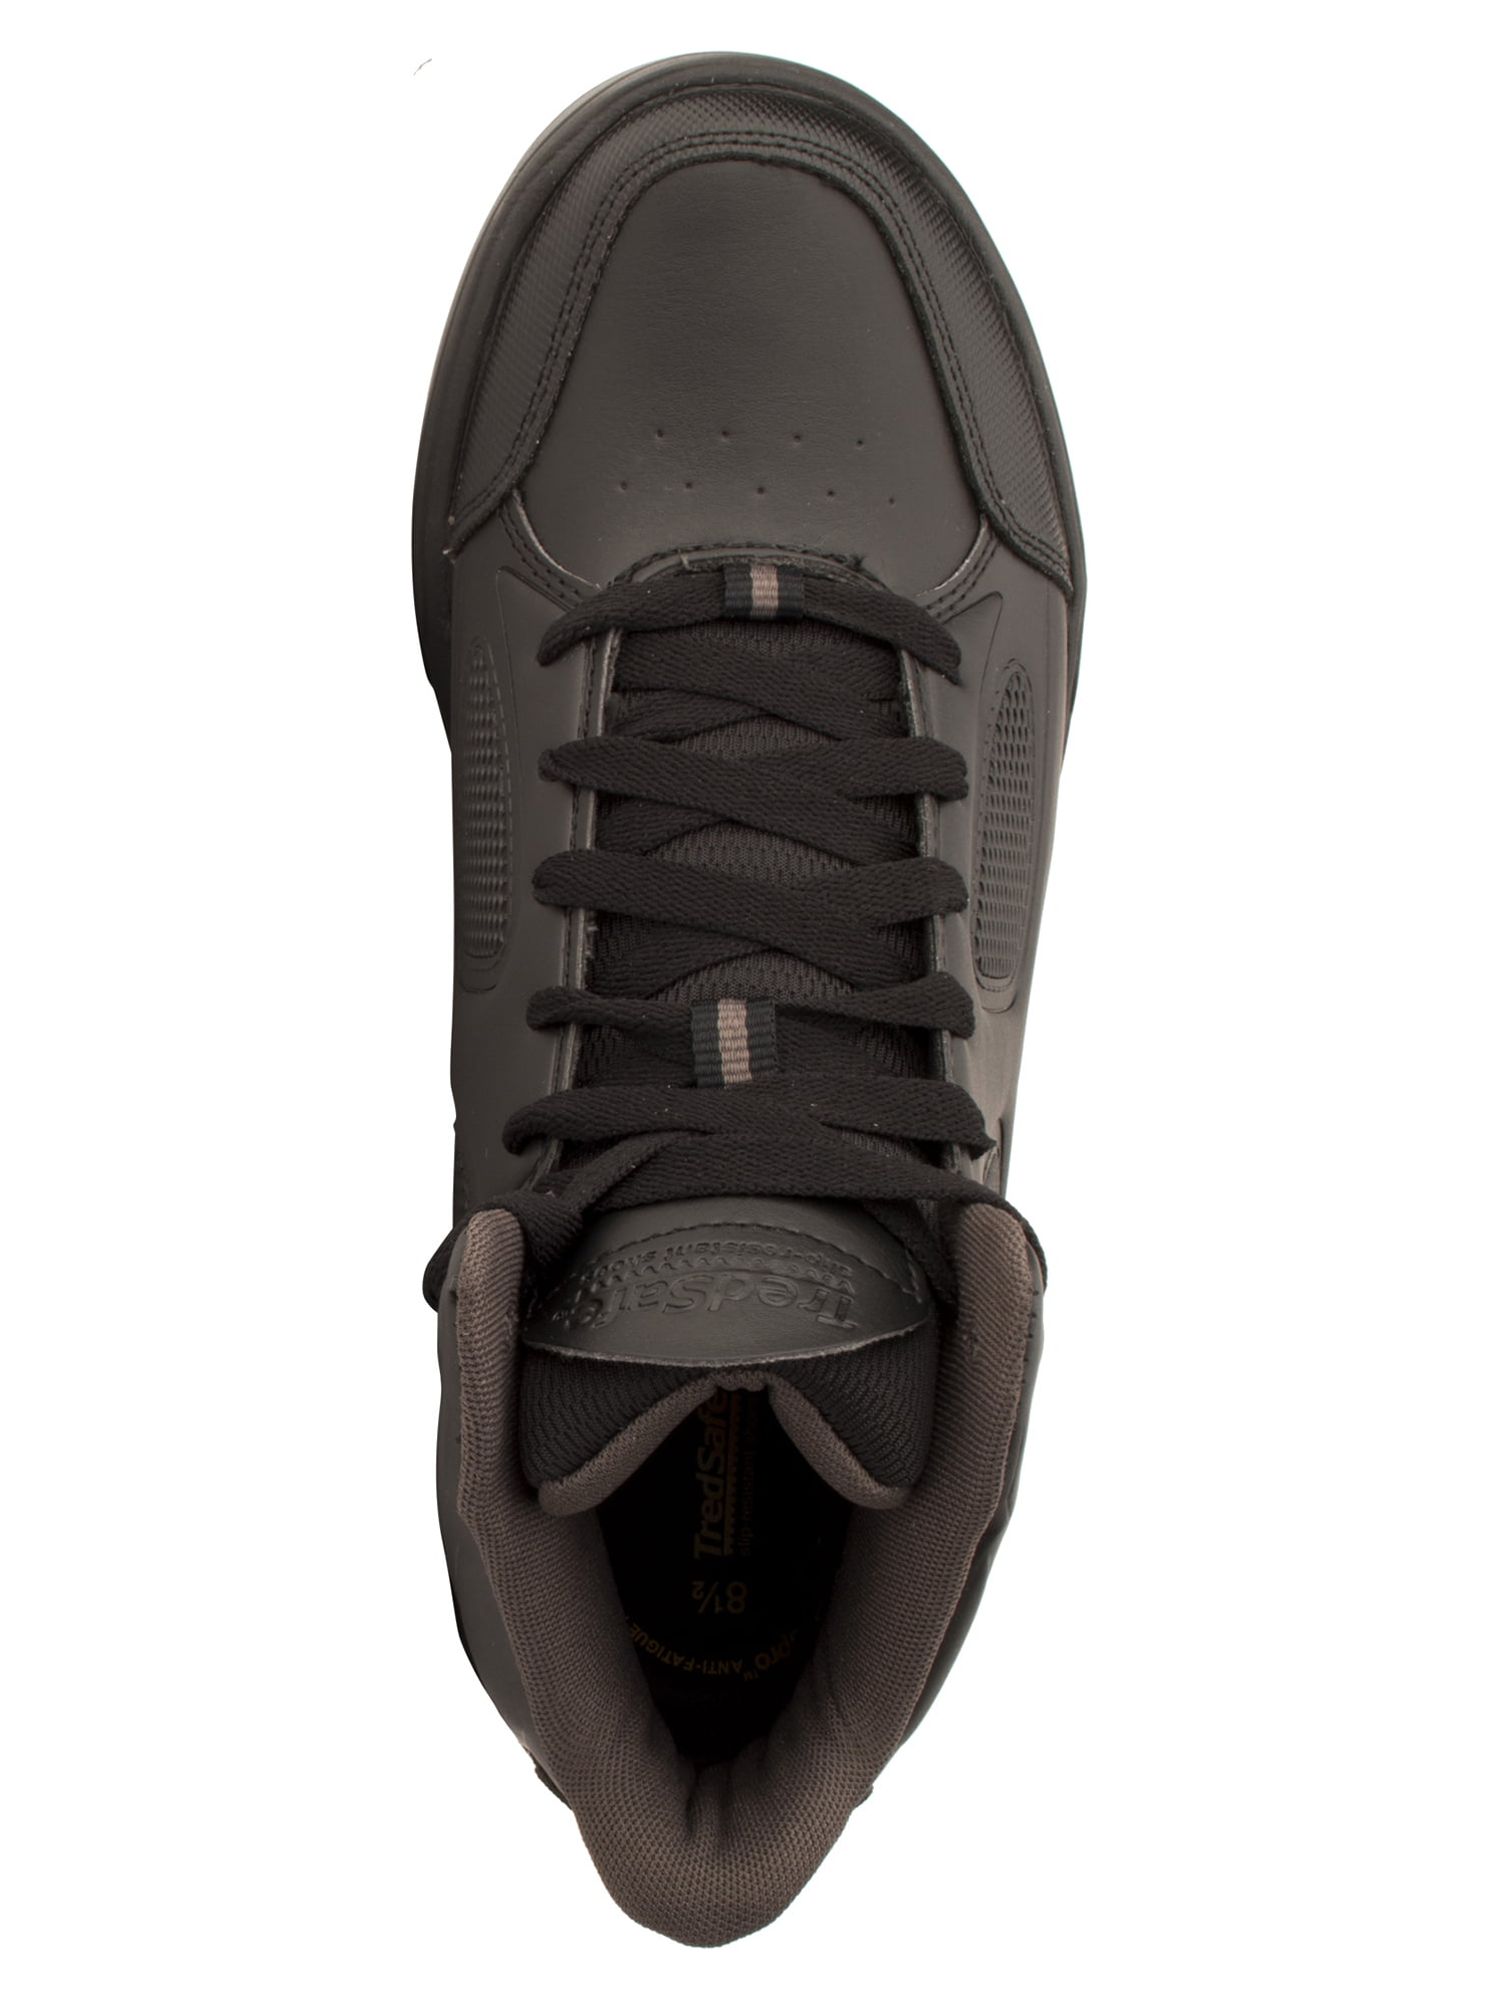 Tredsafe Men's Passit High Top Slip Resistant Shoes - image 5 of 6